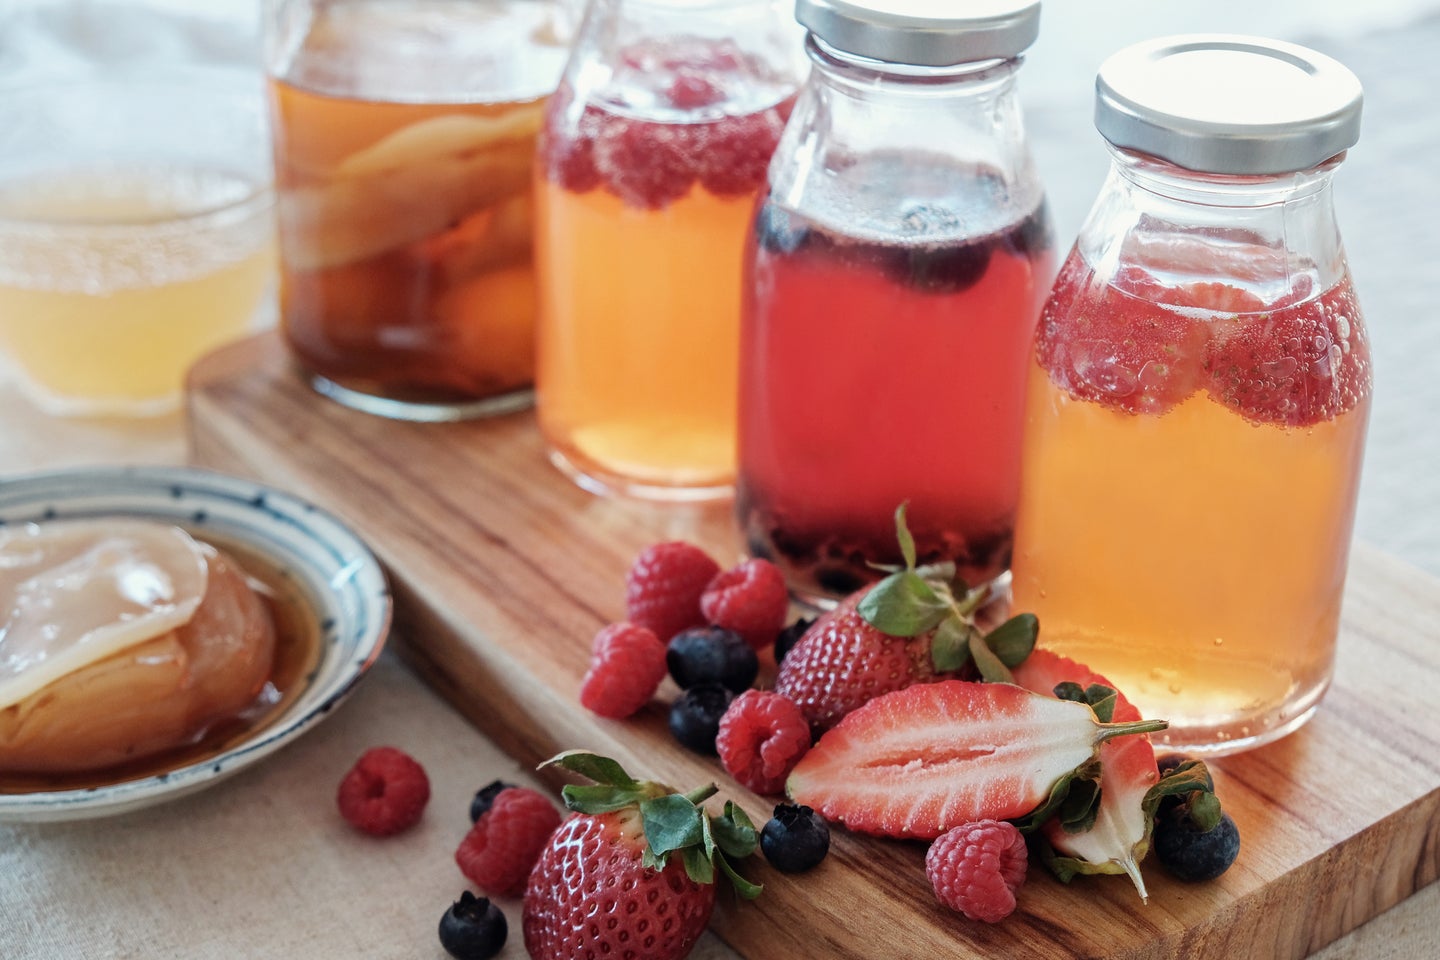 Kombucha second Fermented fruit tea, Probiotic food